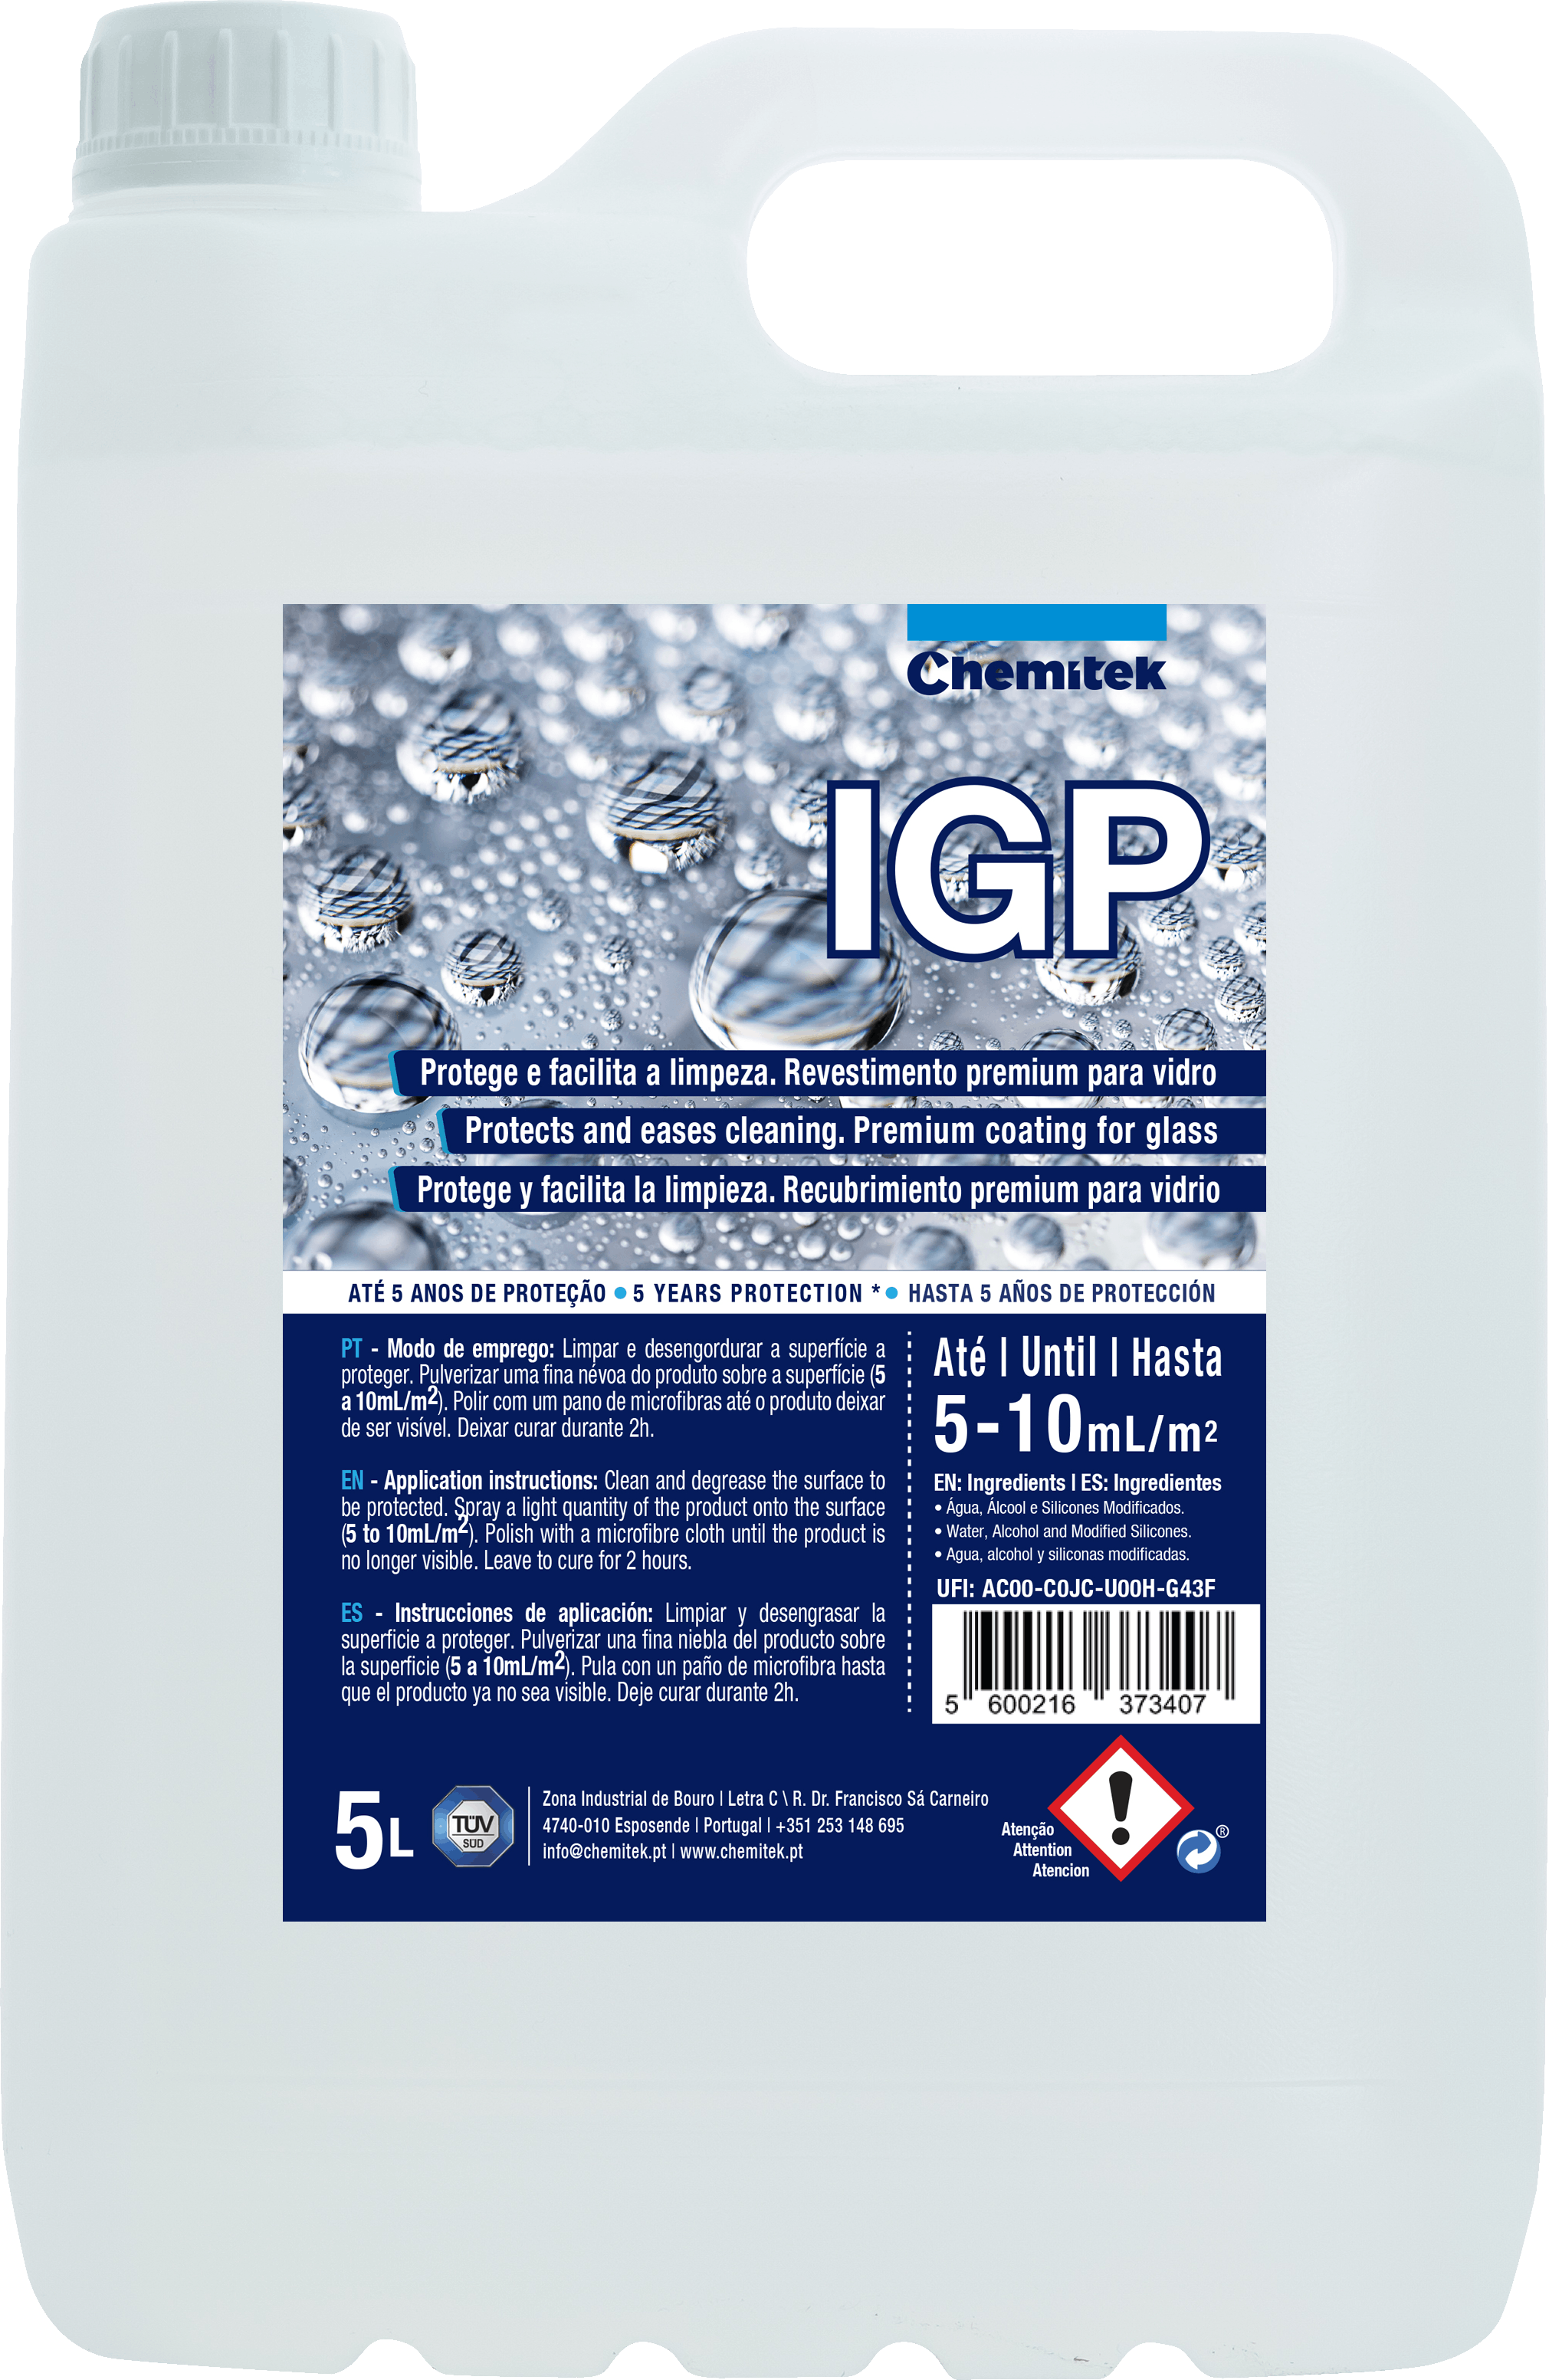 Product - IGP PRO